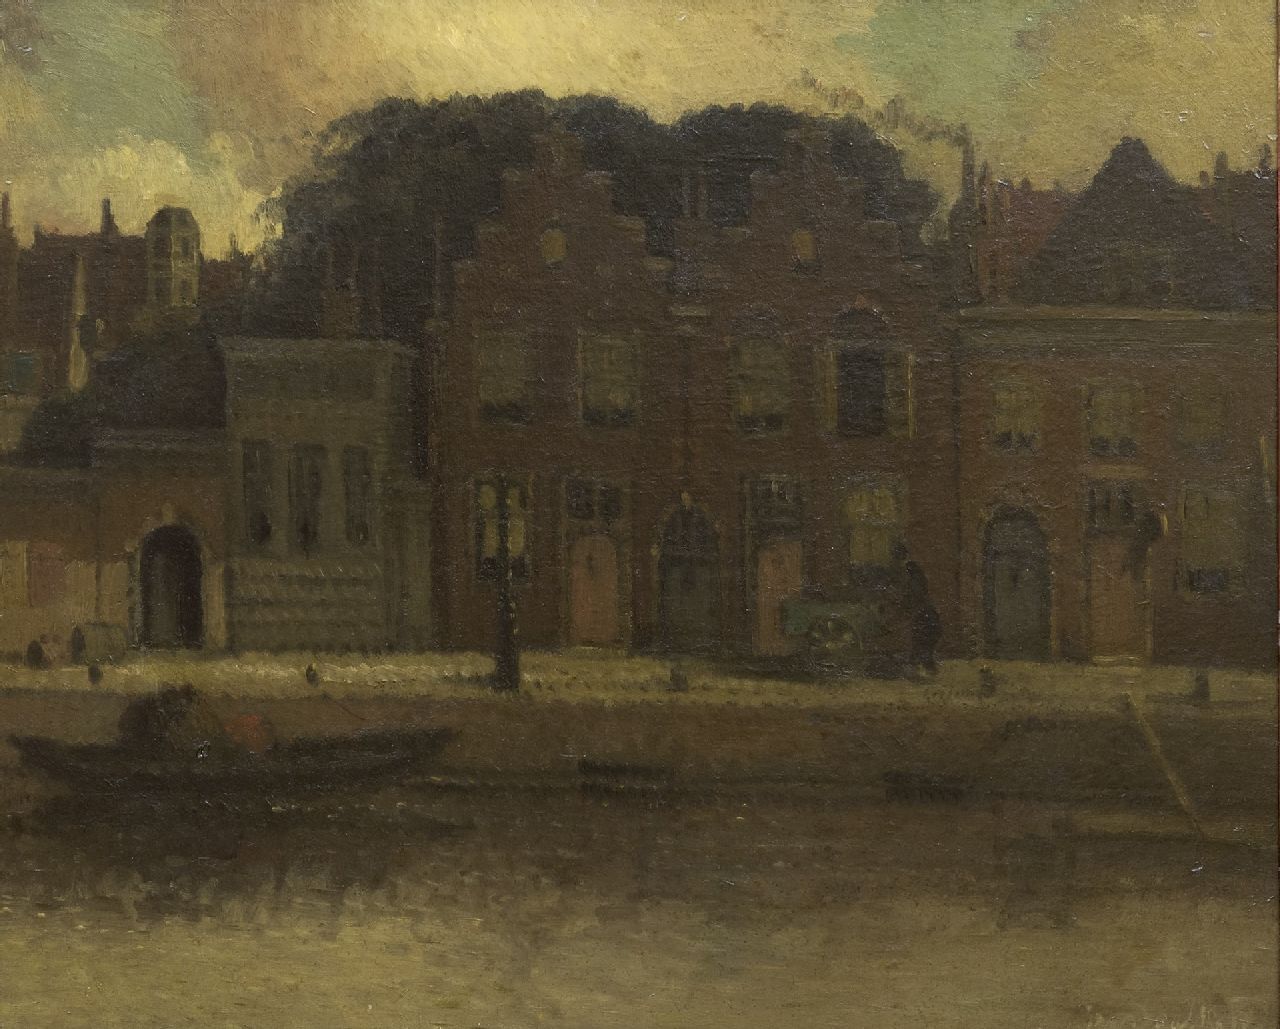 Daalhoff H.A. van | Hermanus Antonius 'Henri' van Daalhoff | Paintings offered for sale | Houses along the quay, oil on panel 37.7 x 46.0 cm, signed l.r.